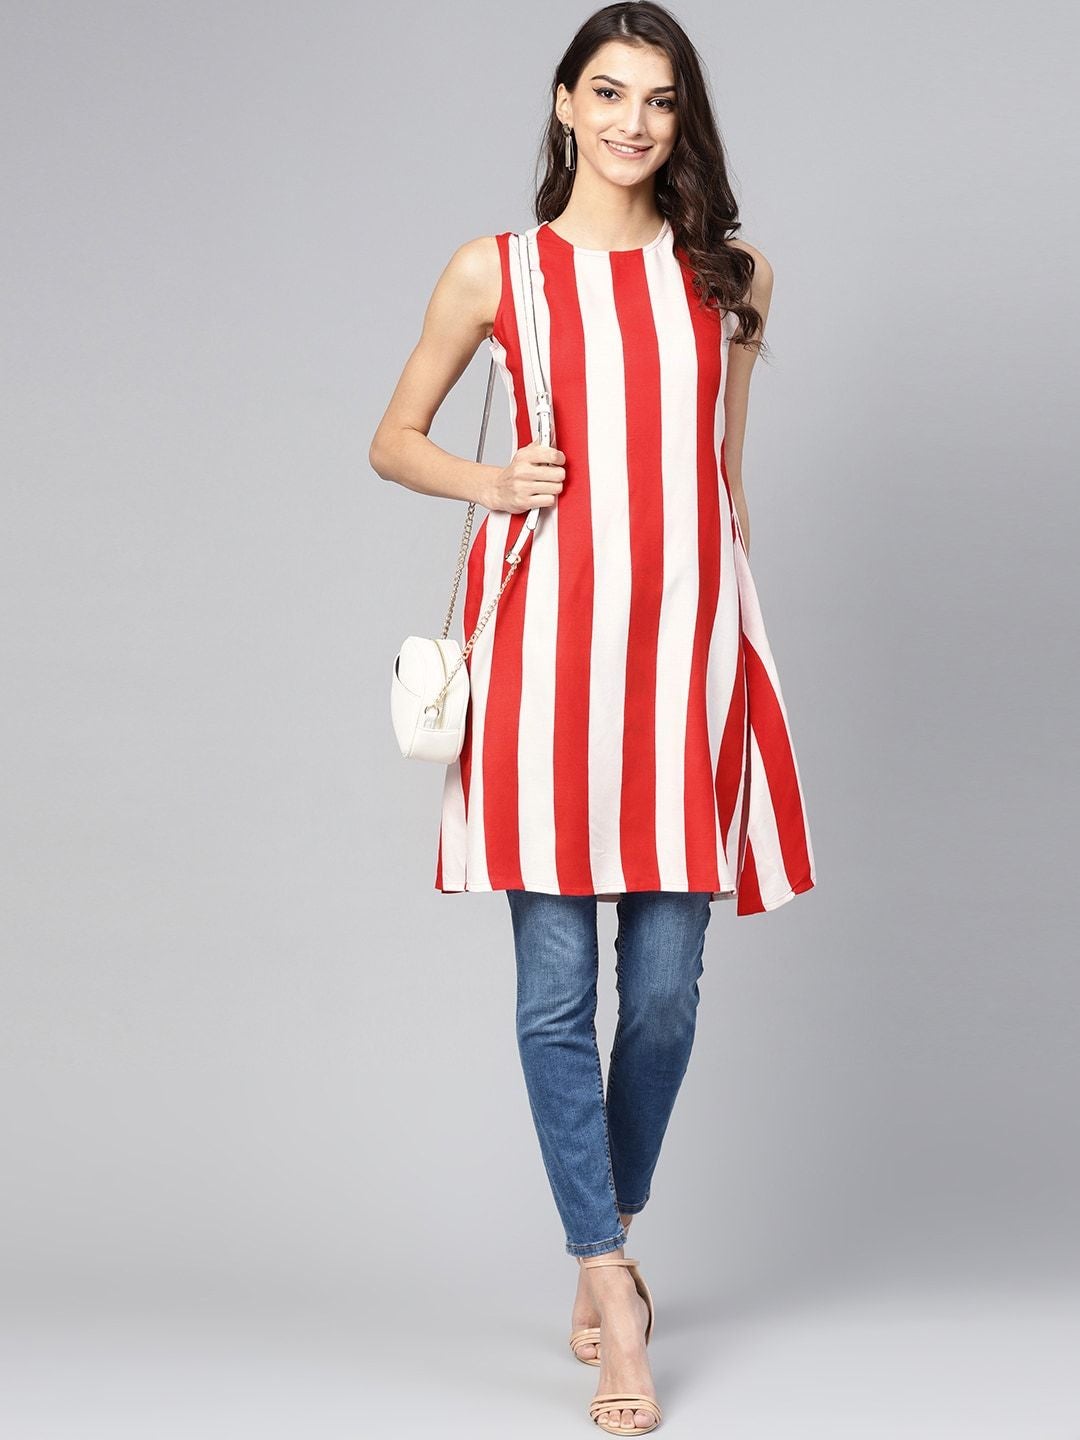 Women's Red & White Striped A-Line Dress - Meeranshi